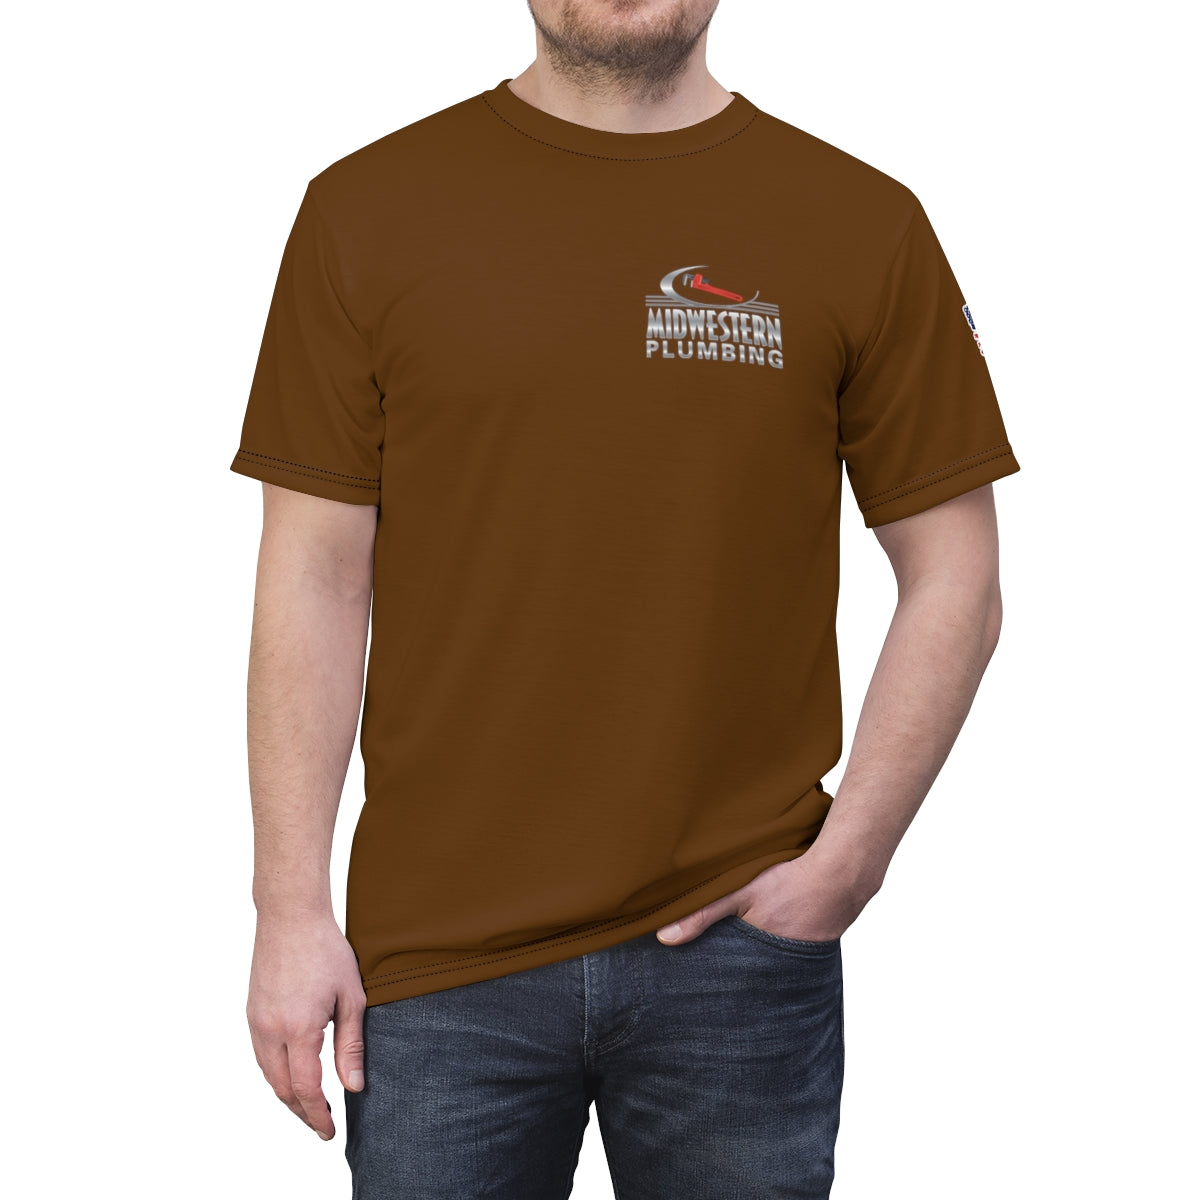 Camisa de trabajo premium marrón Midwestern Plumbing